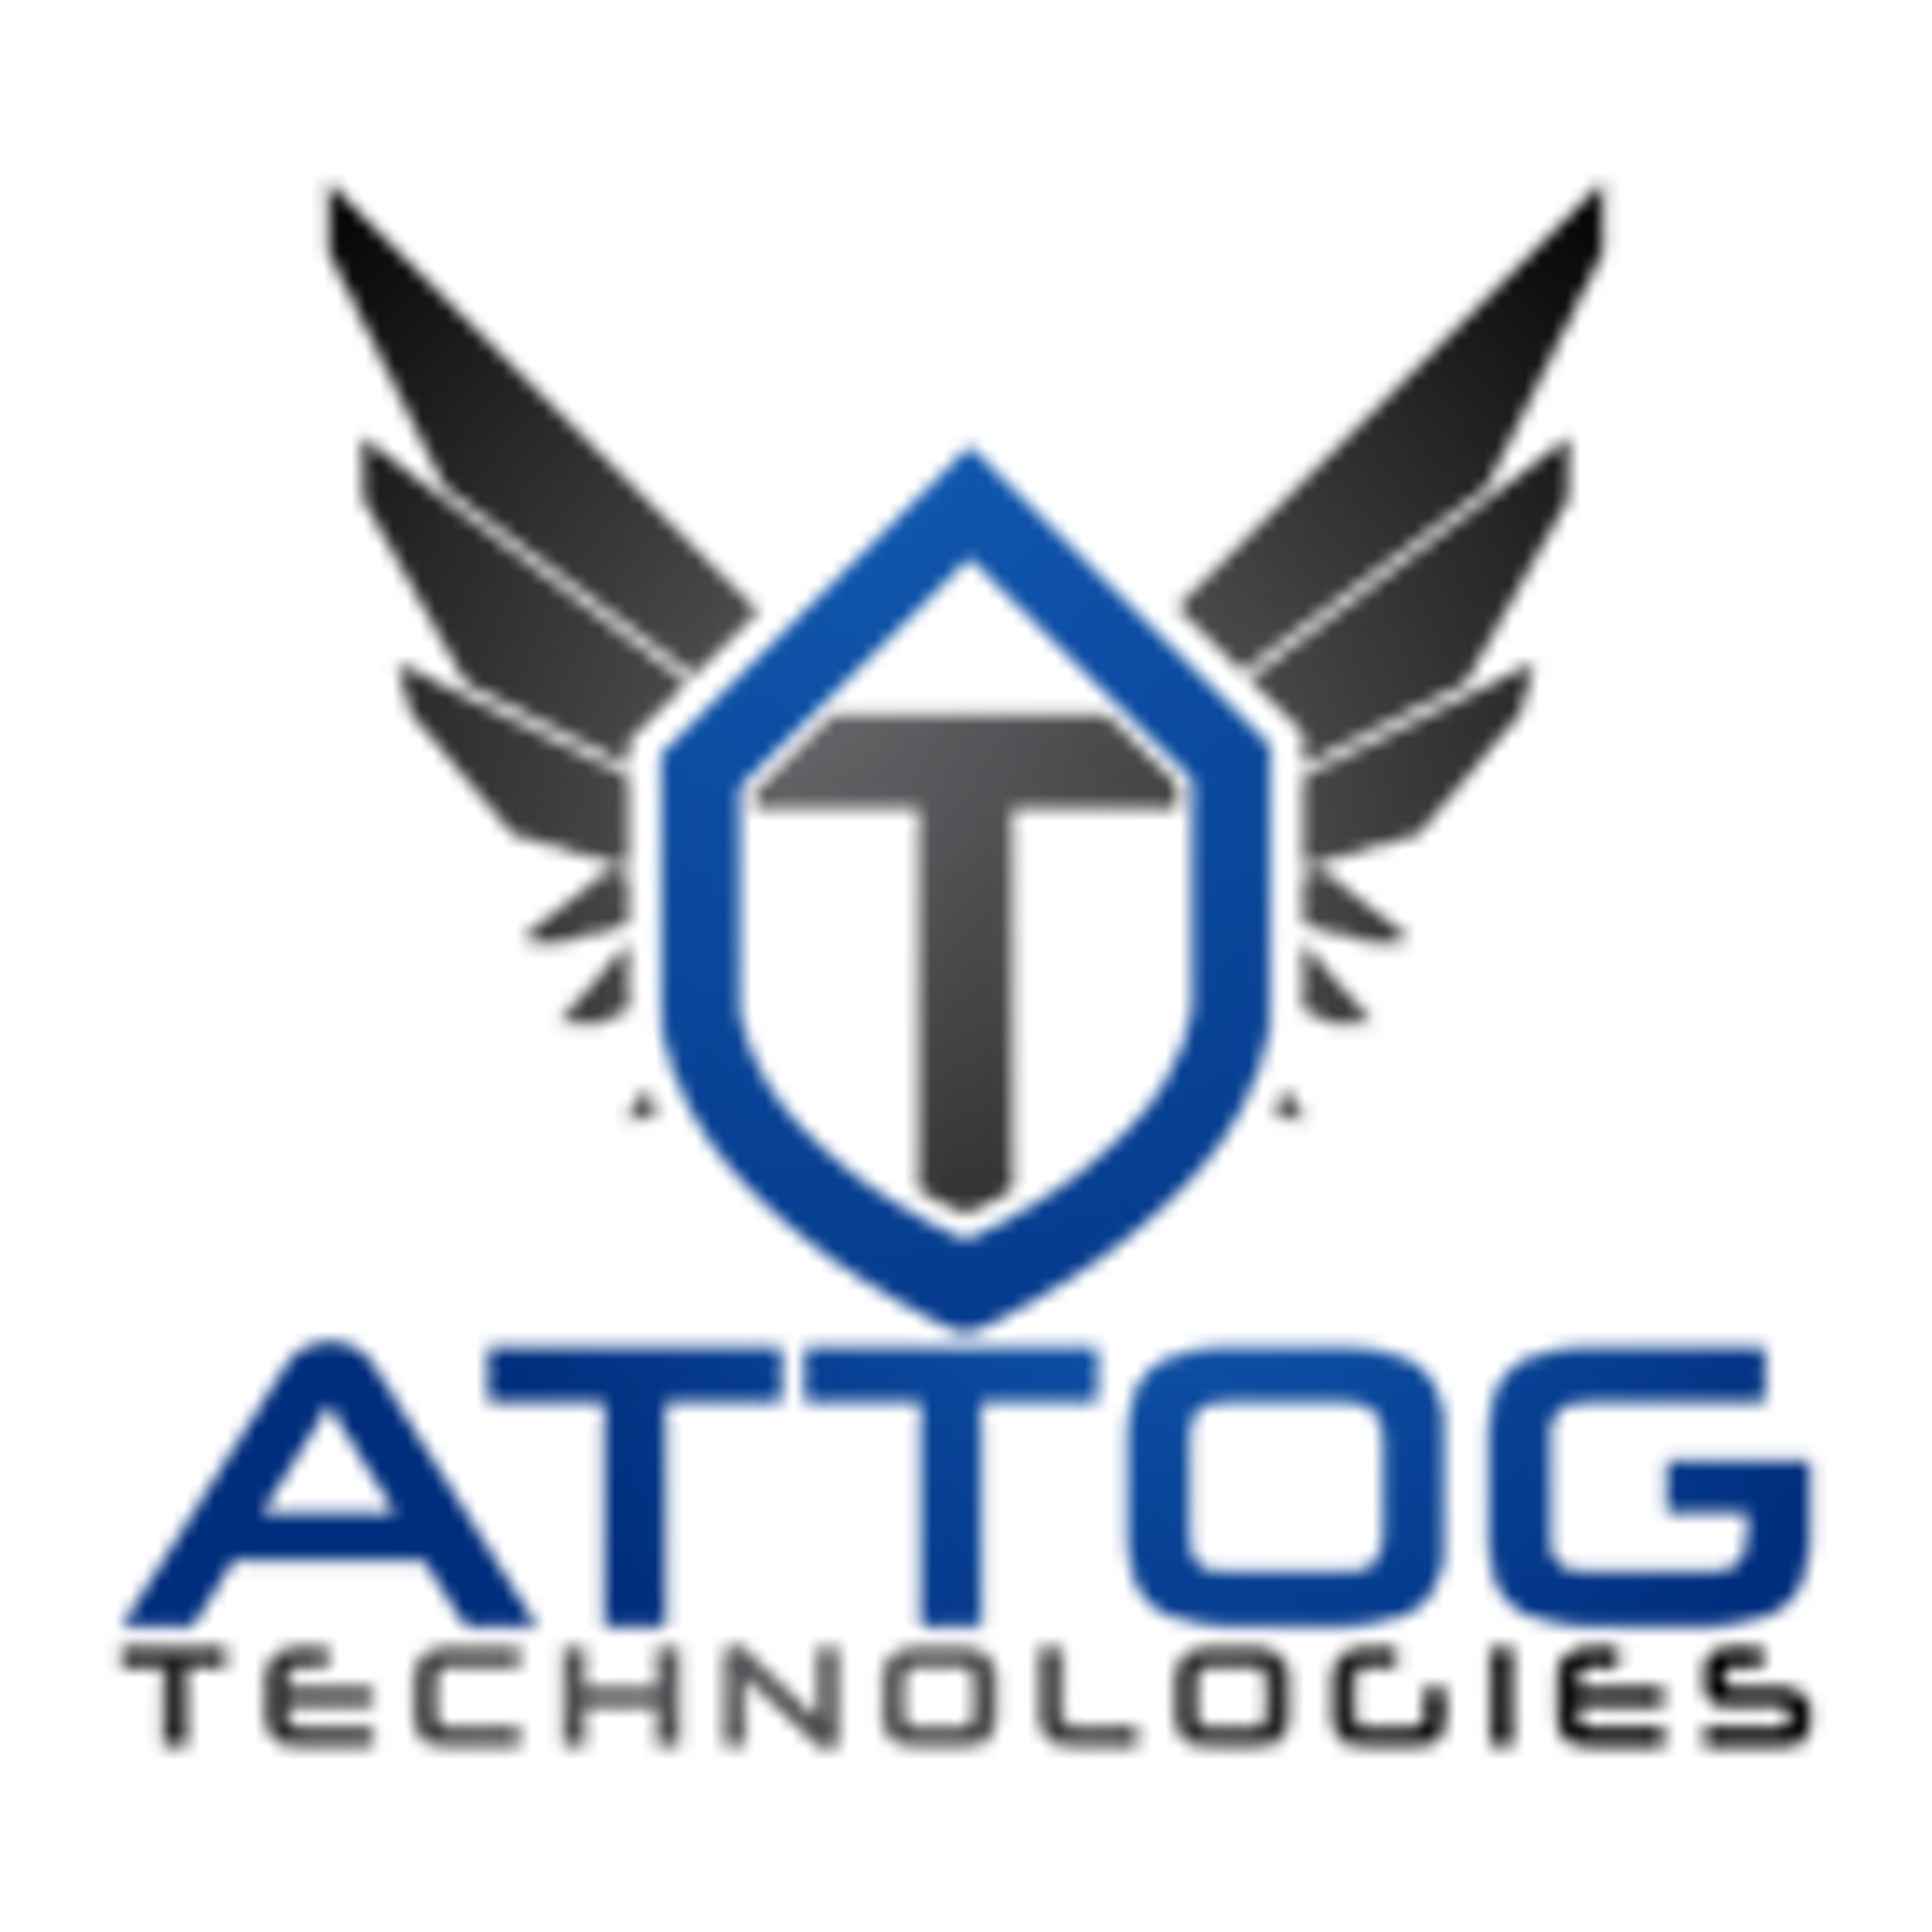 Attogtech.com